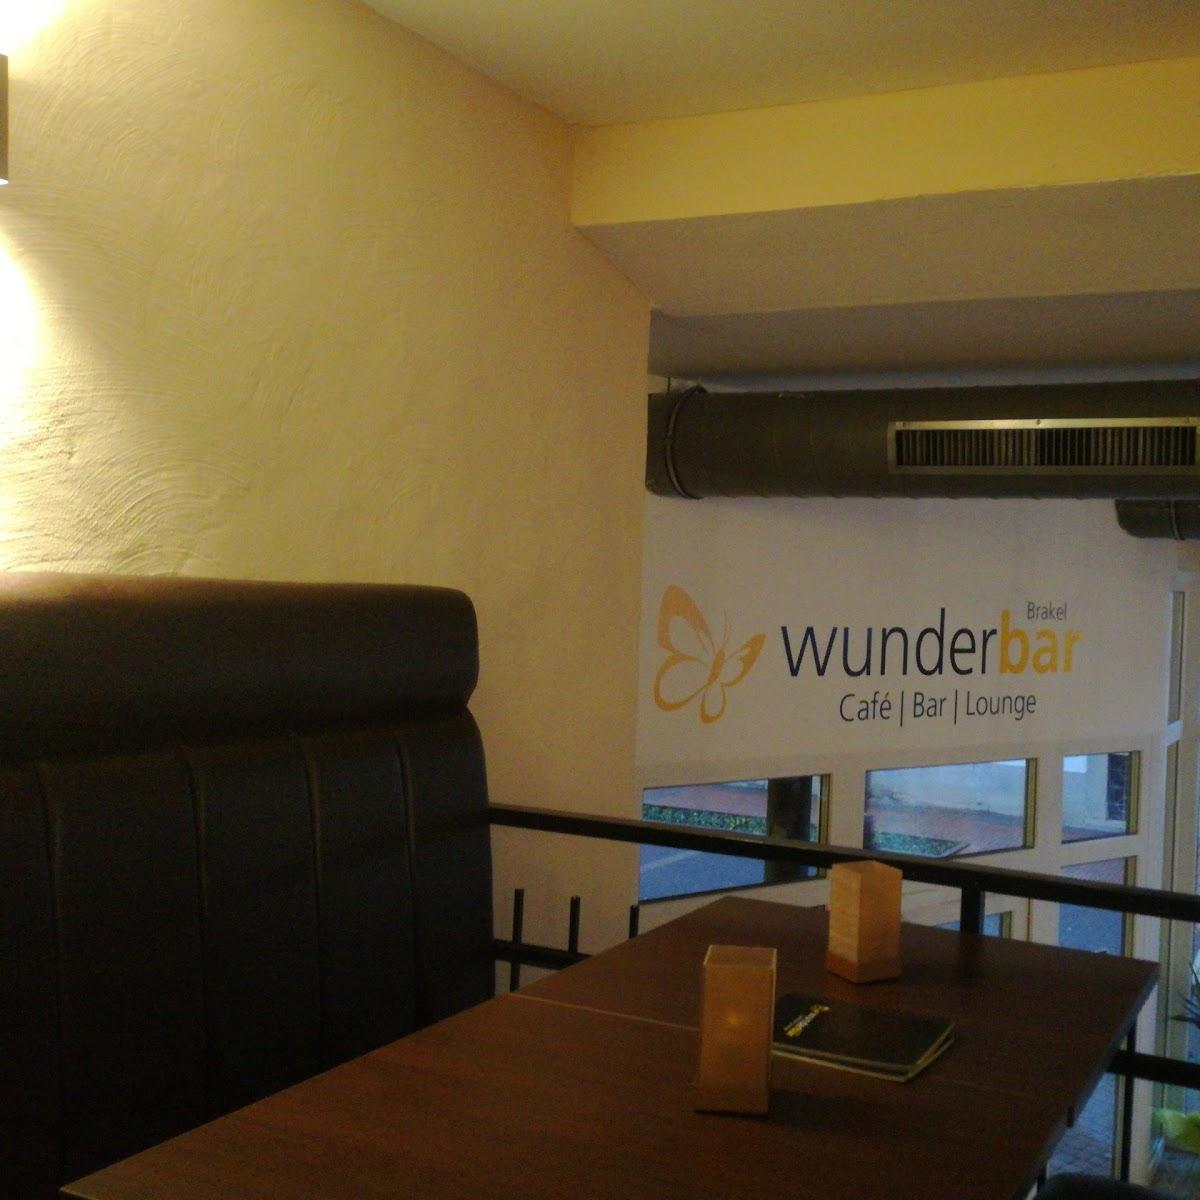 Restaurant "Wunderbar" in Brakel